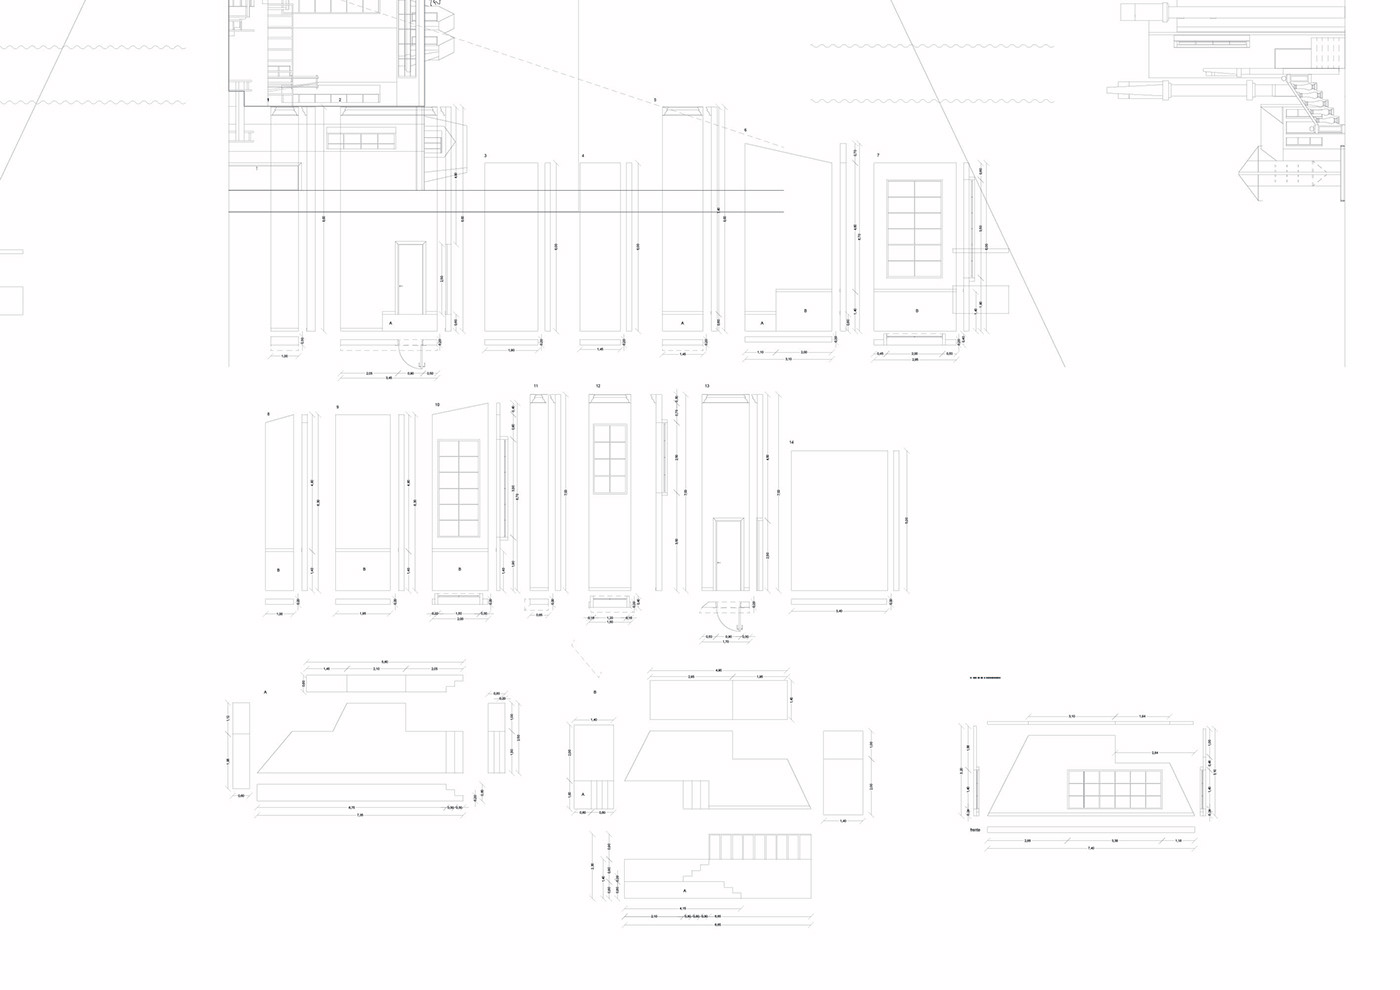 AutoCAD escenografia Illustrator maquetas scale model STAGE DESIGN